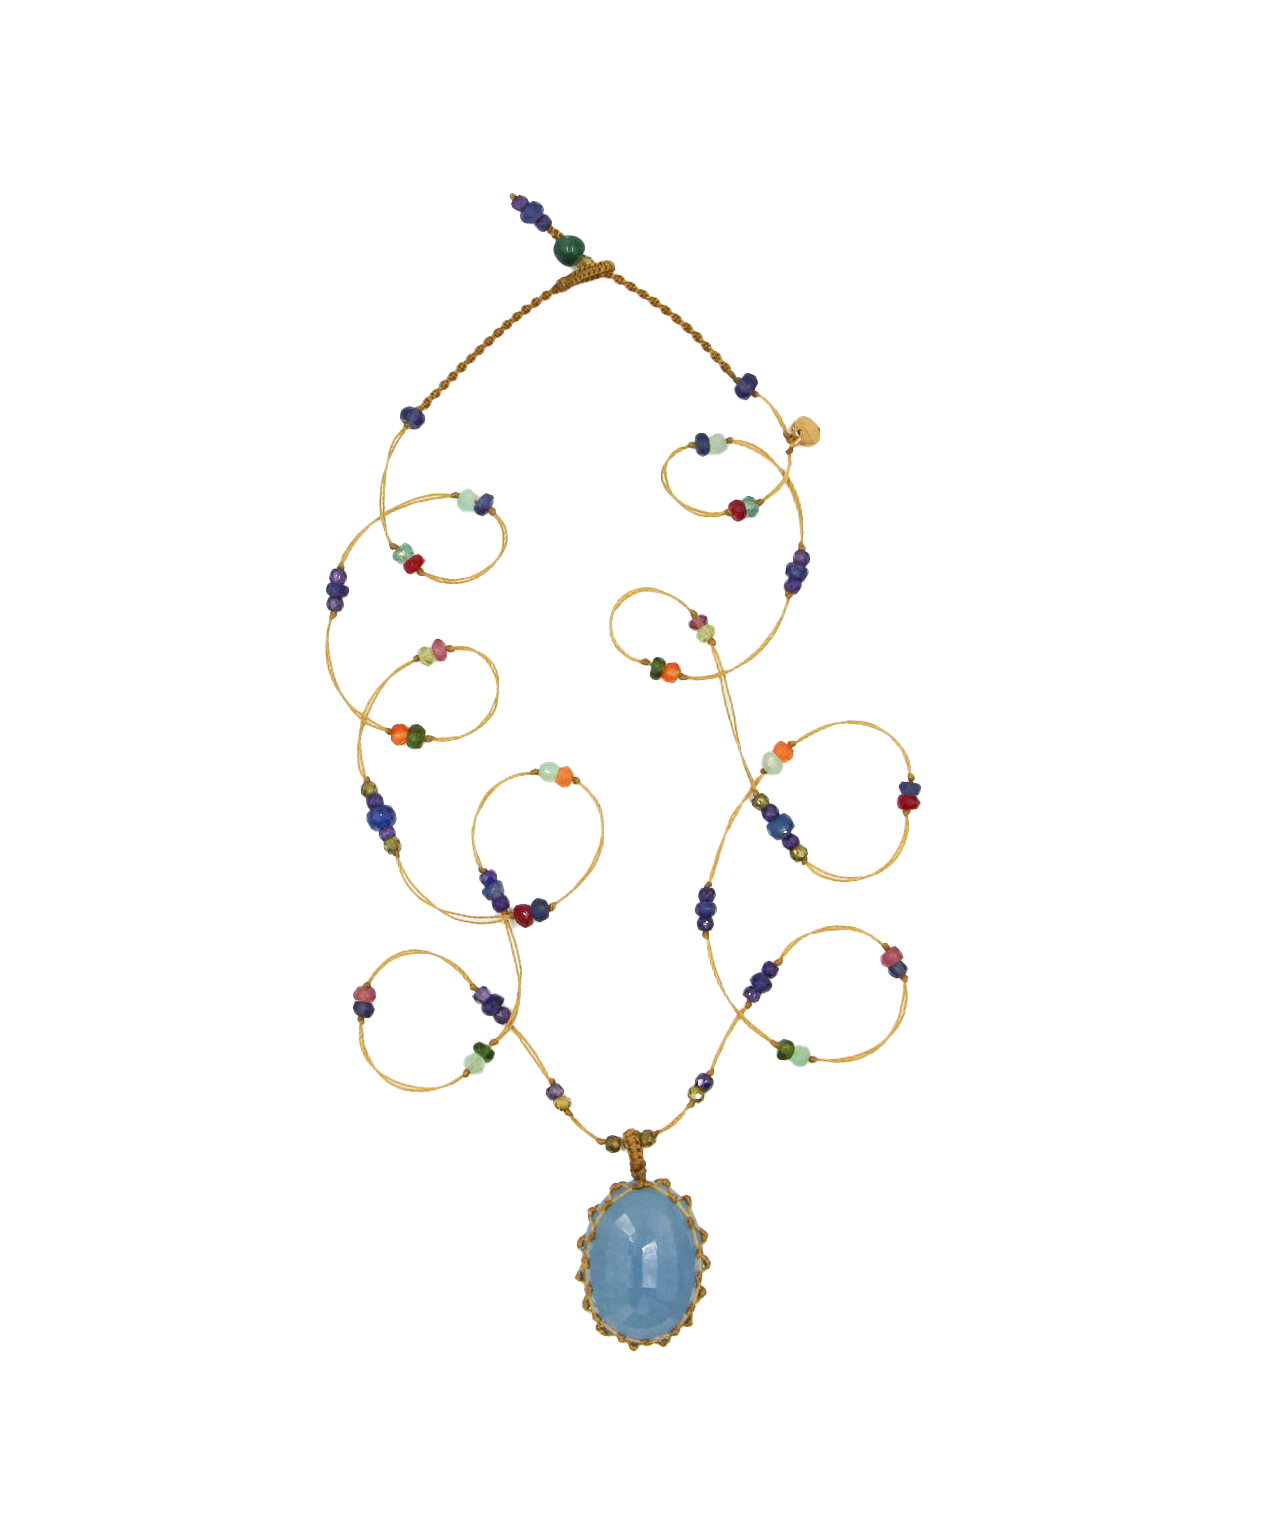 Tibetan Long Necklace - Blue Aquamarine - Mix Multi Stones - Tobacco Thread